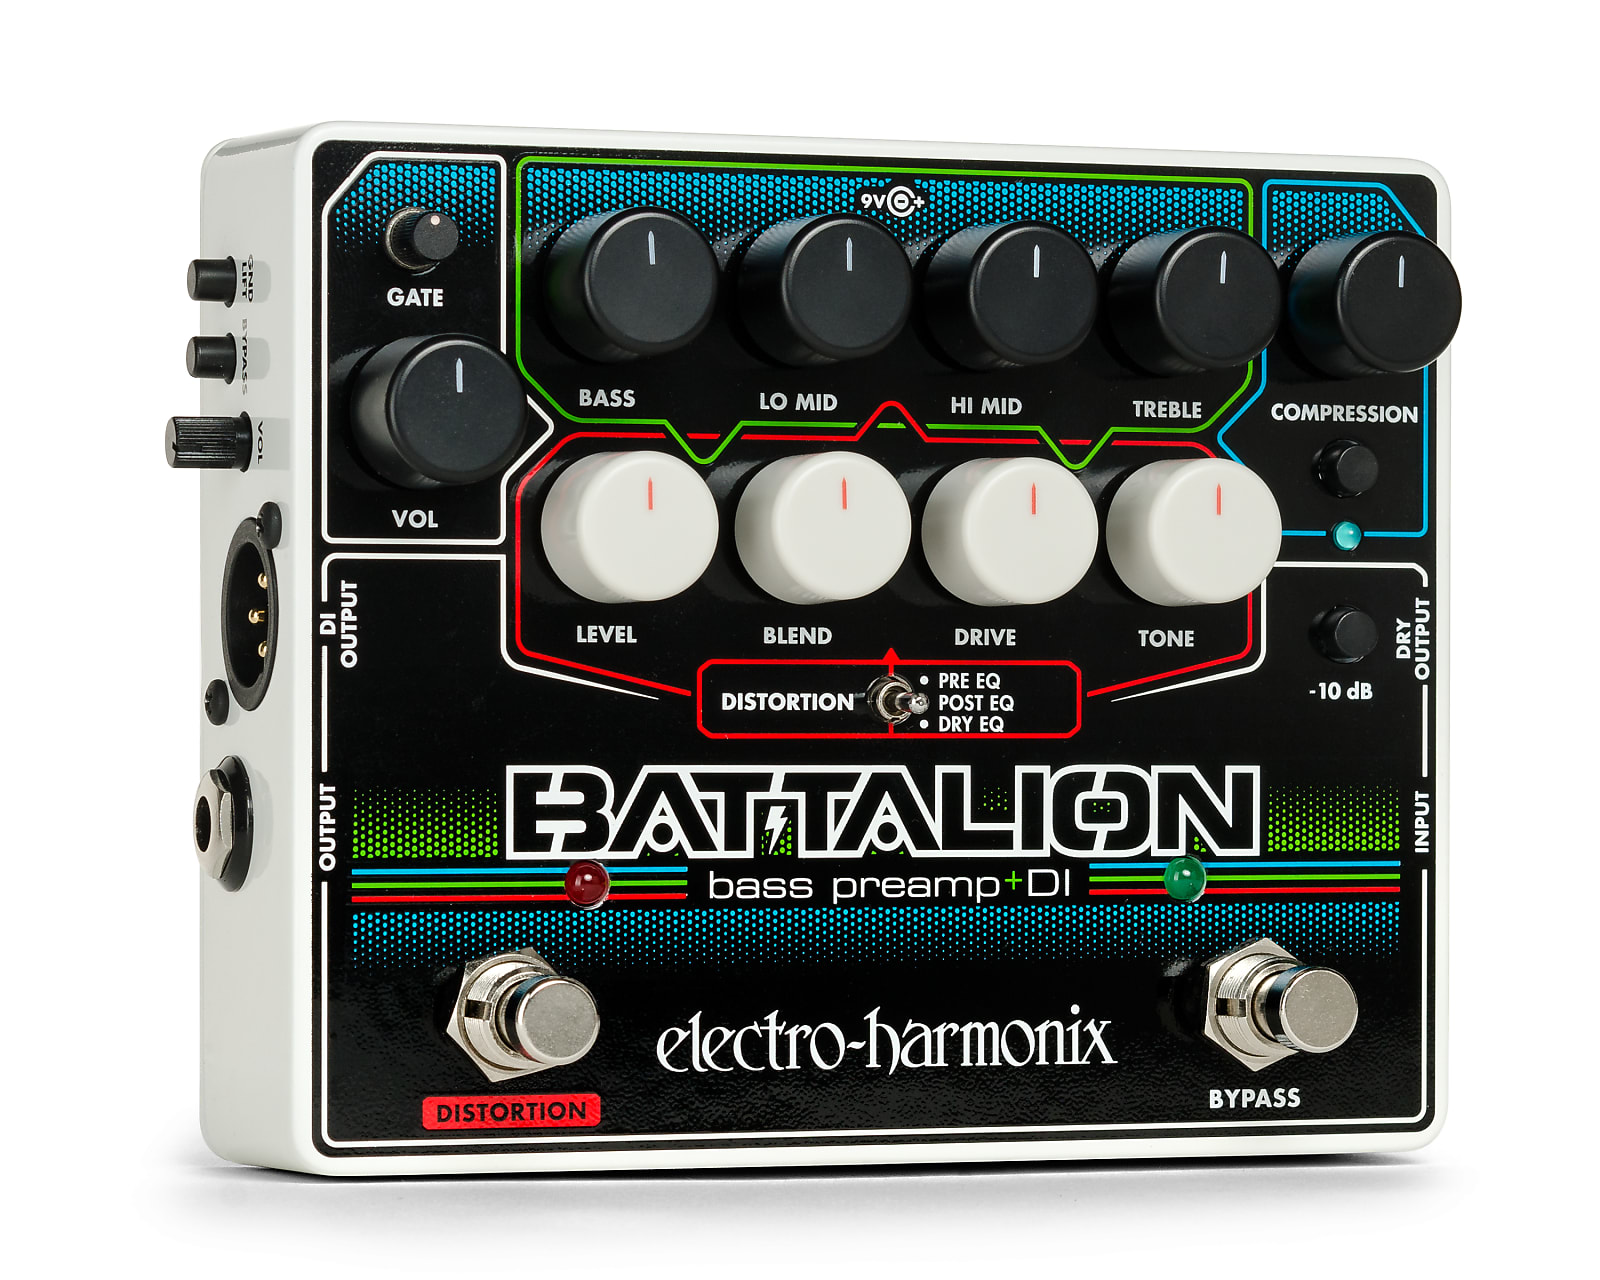 Electro-Harmonix EHX Battalion Bass Preamp / DI Effects Pedal